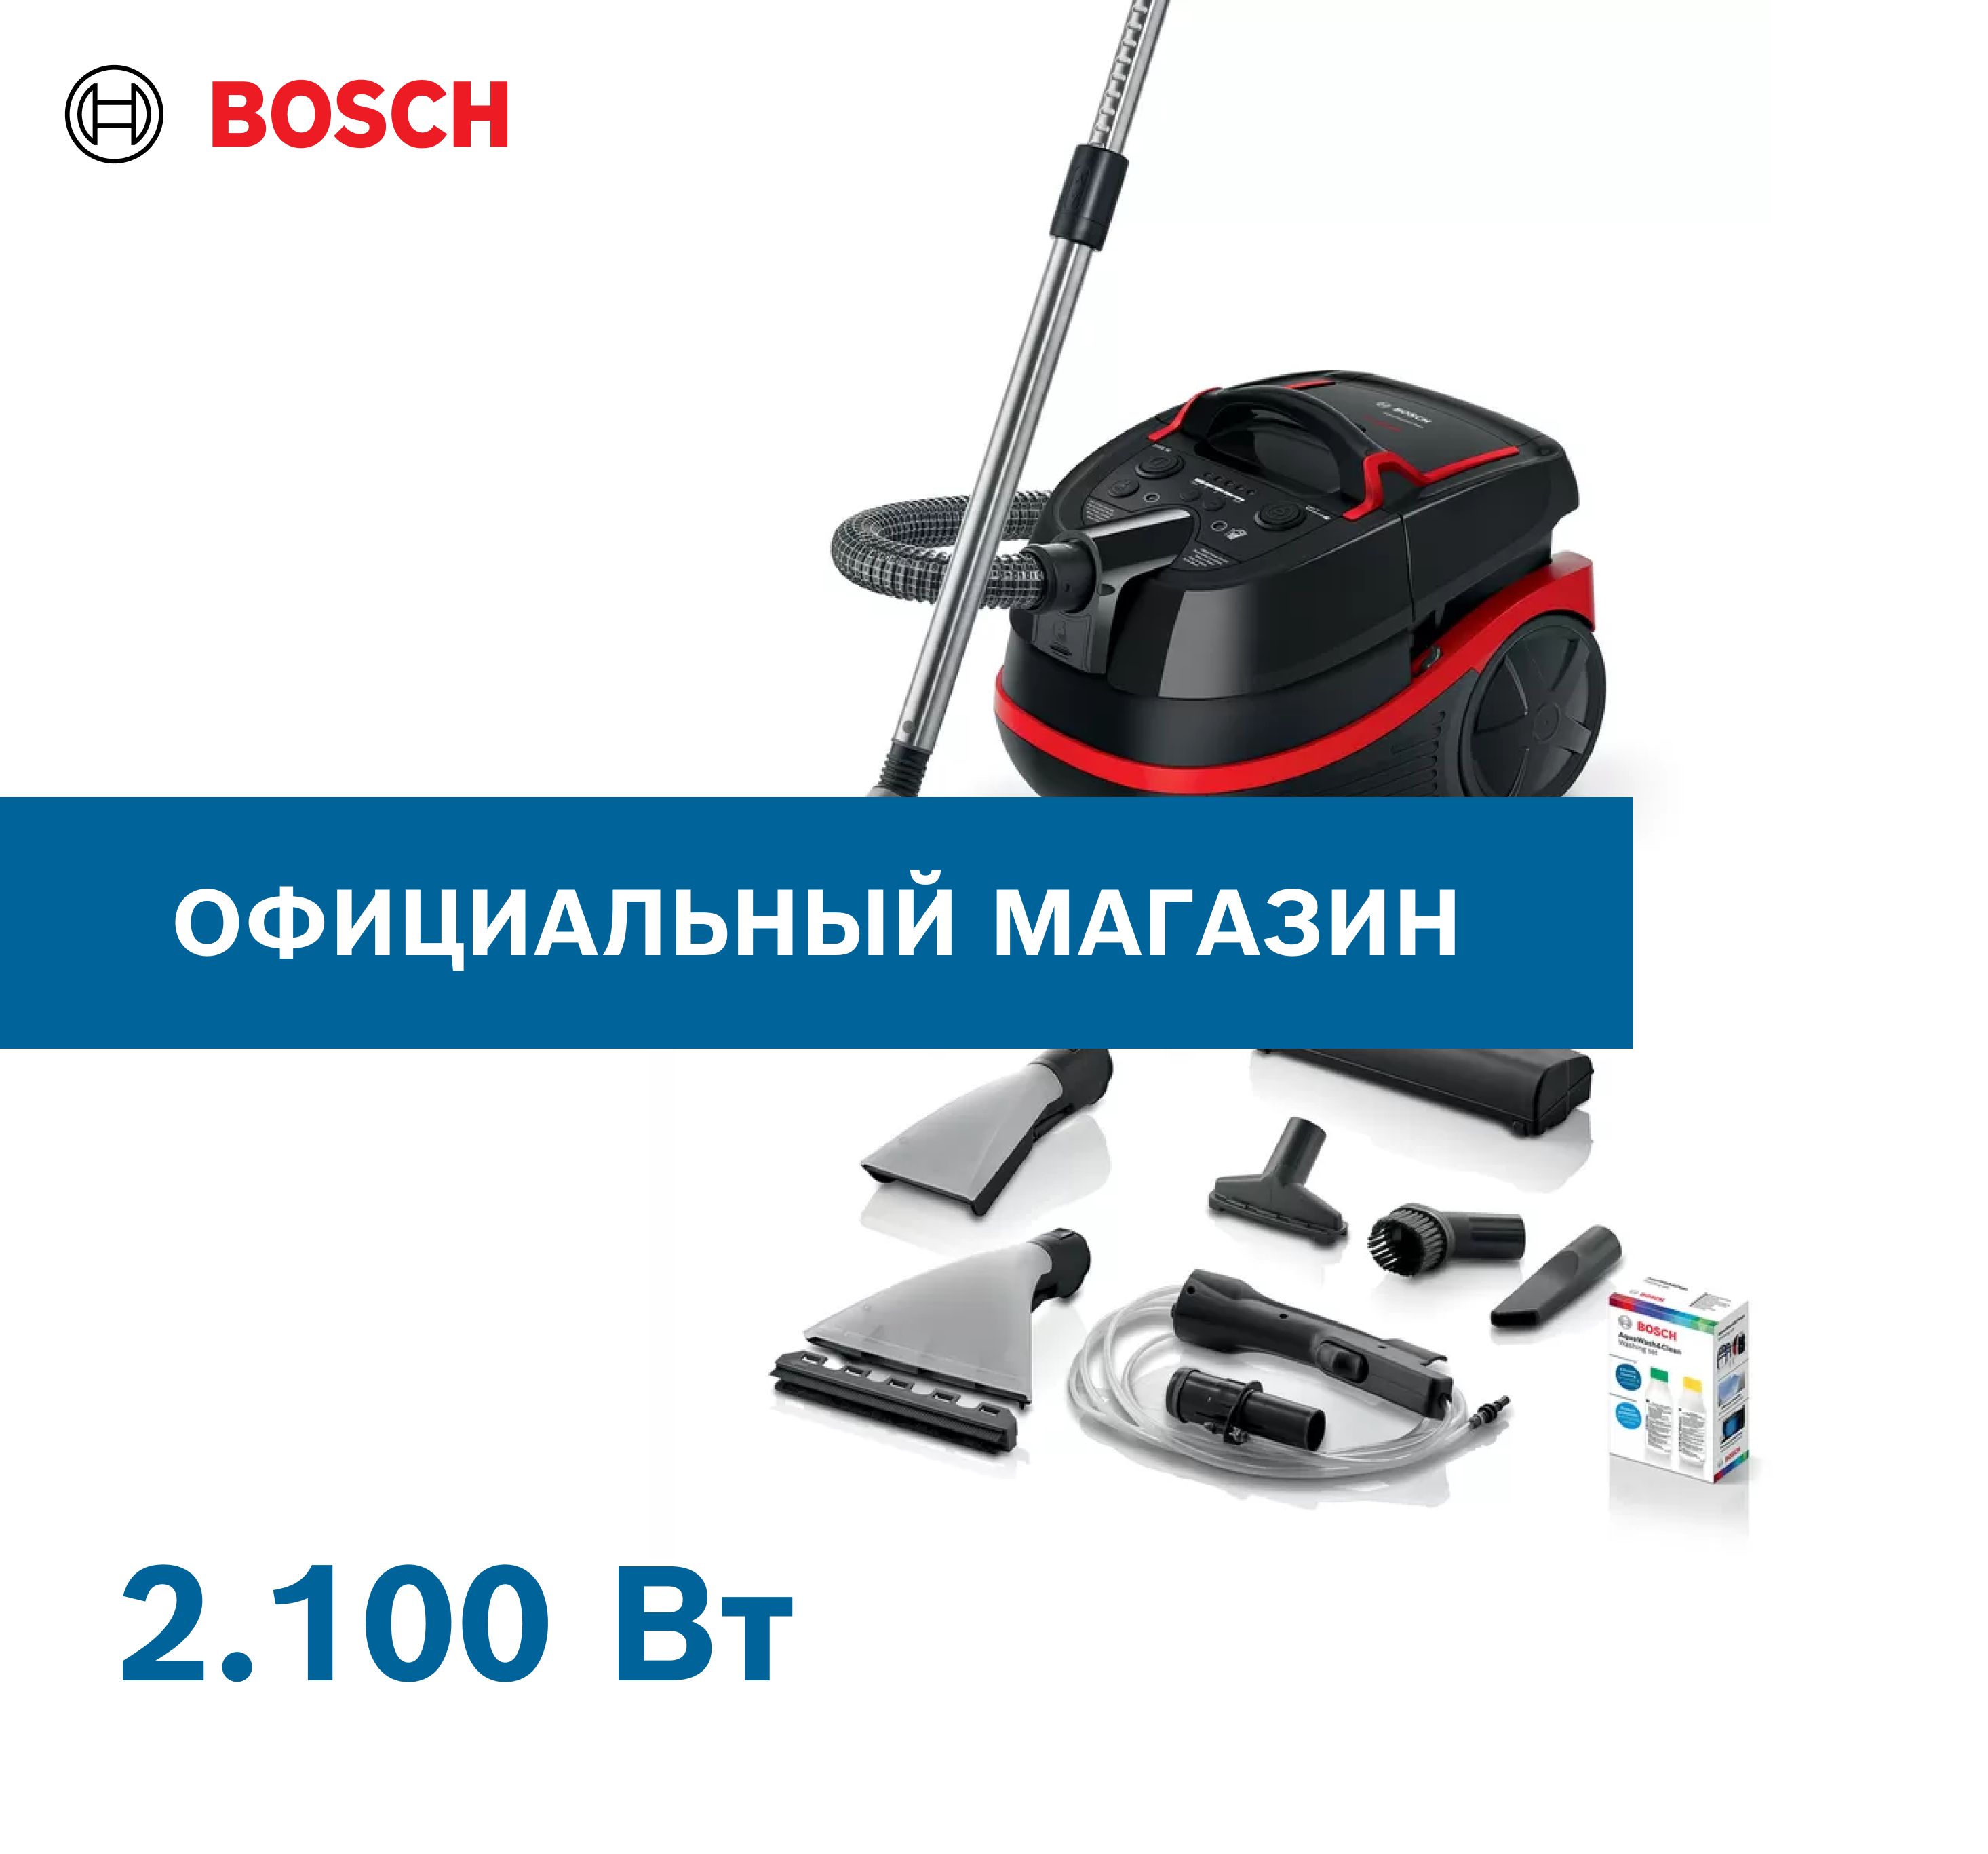 Bosch bwd421pow